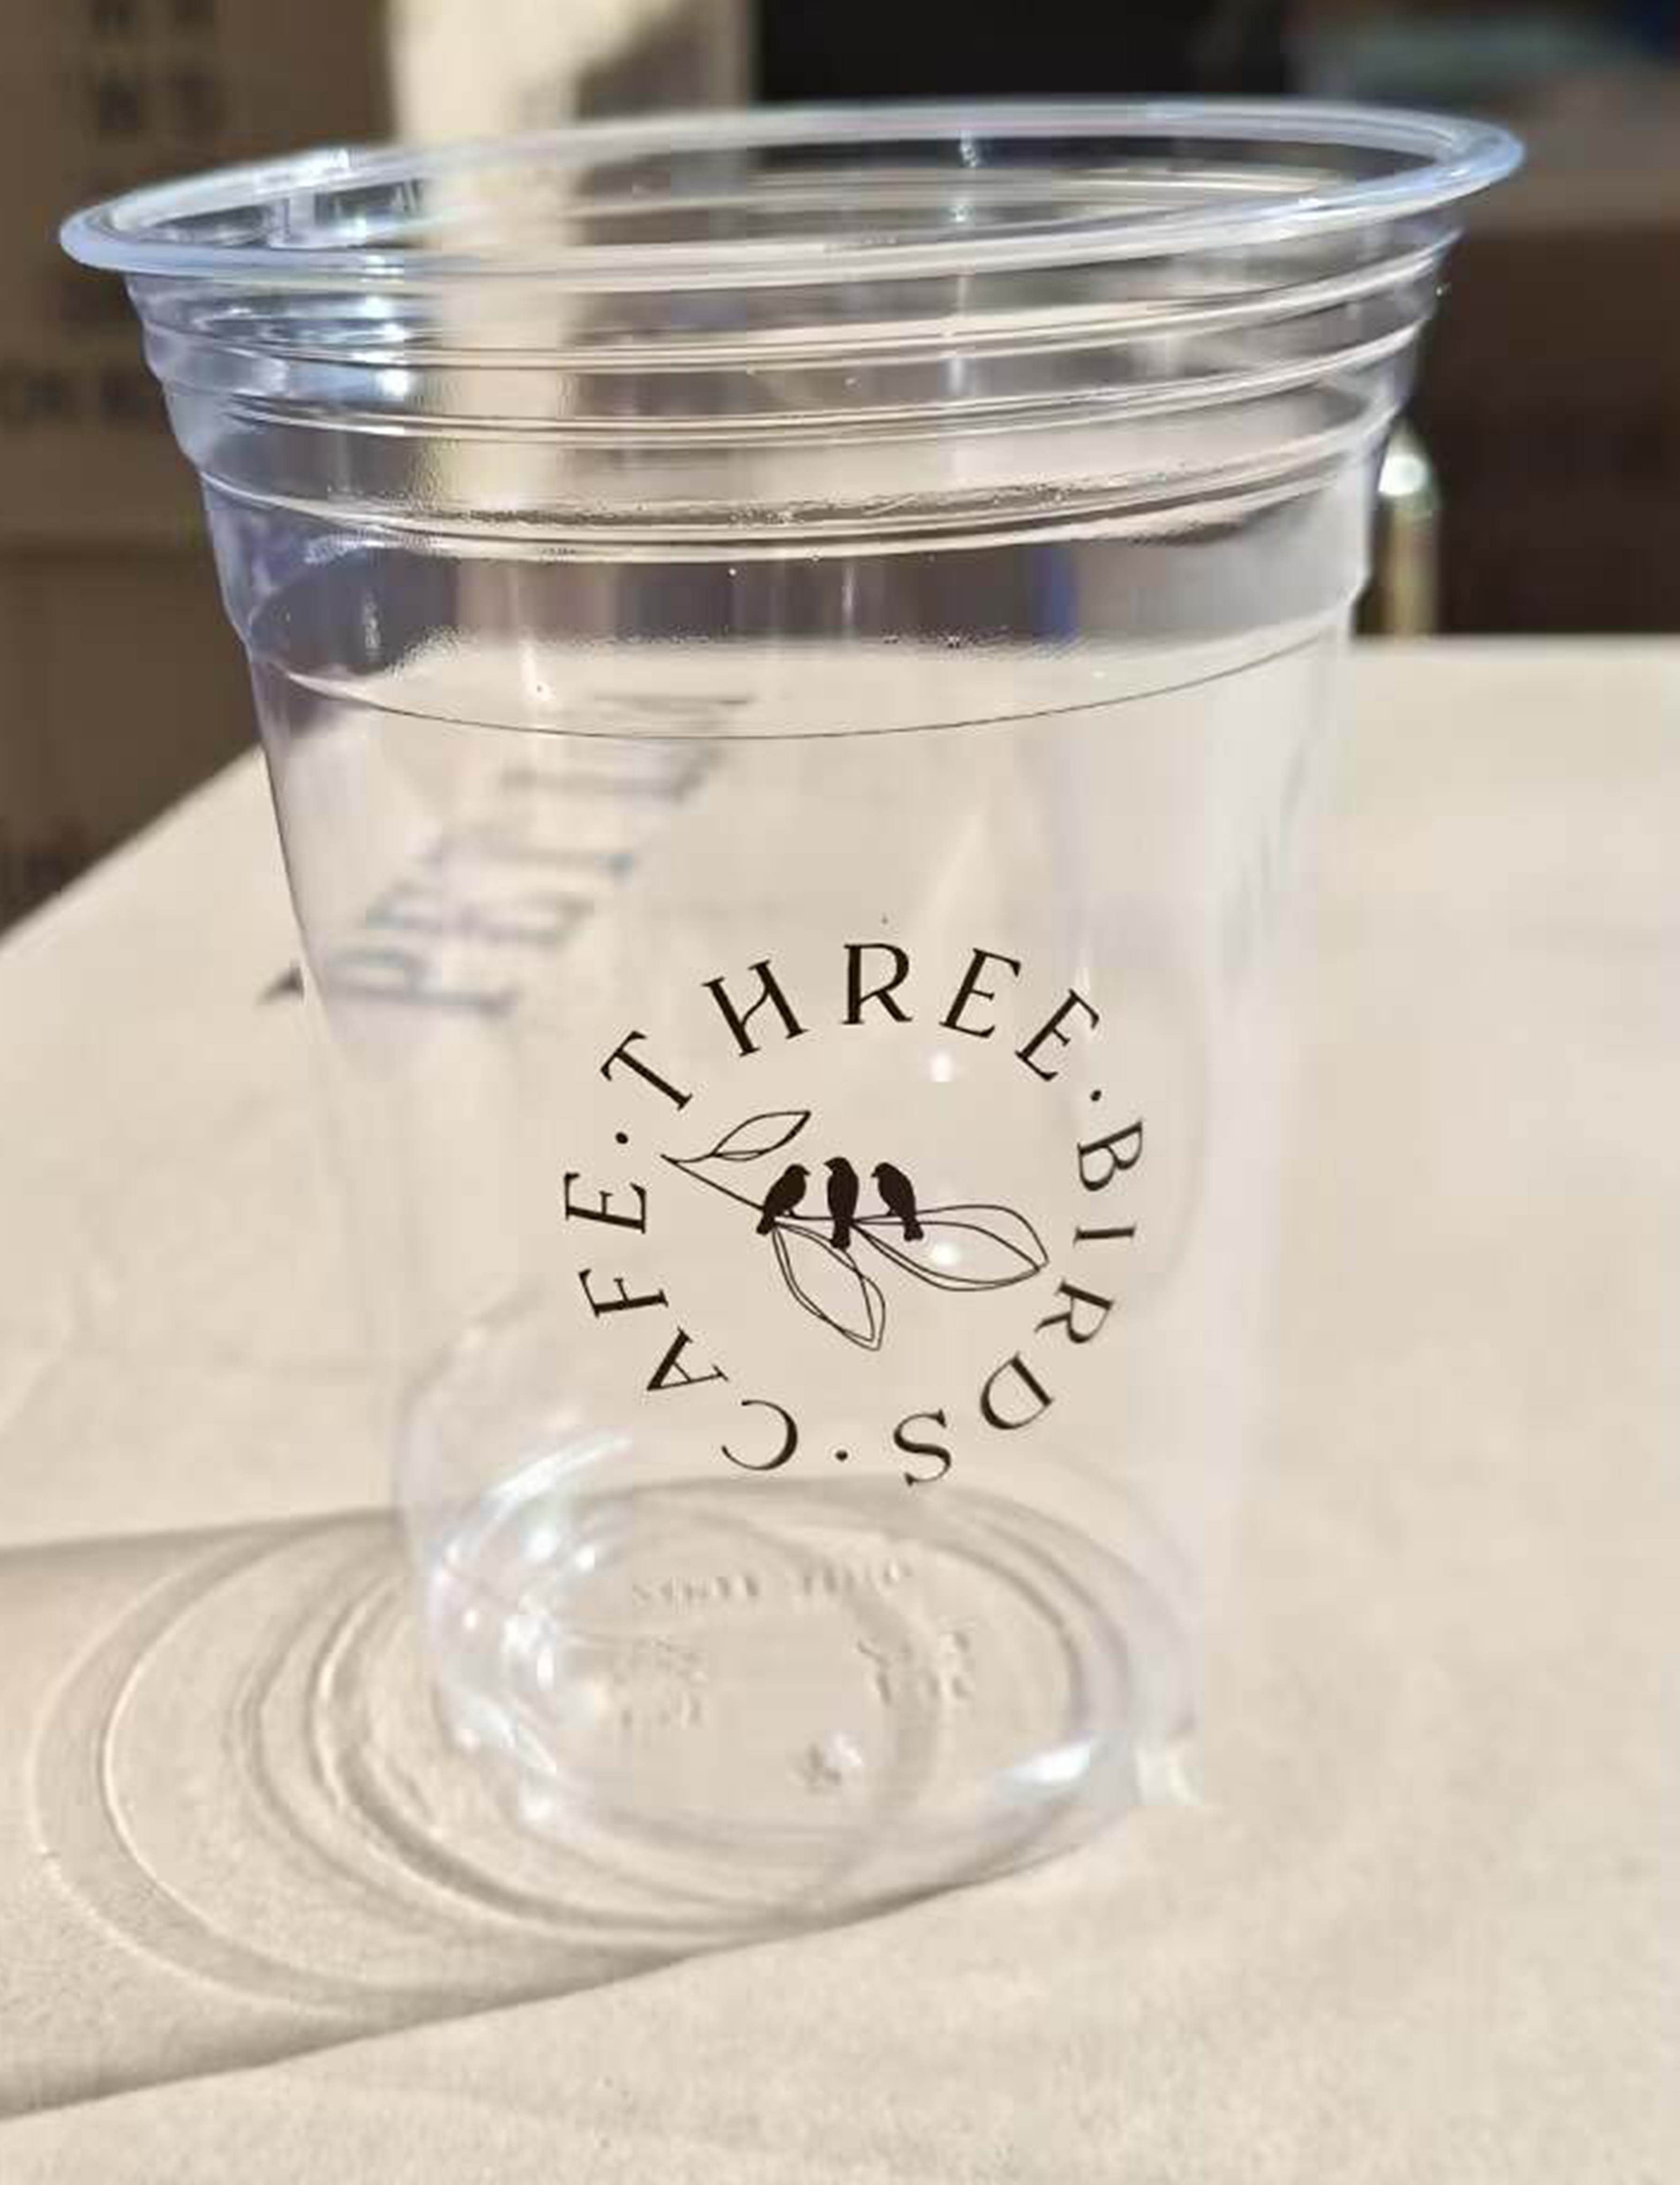 Disposable Plastic Cups For Espresso Coffee (250 Count) – Healthtex  Distributors